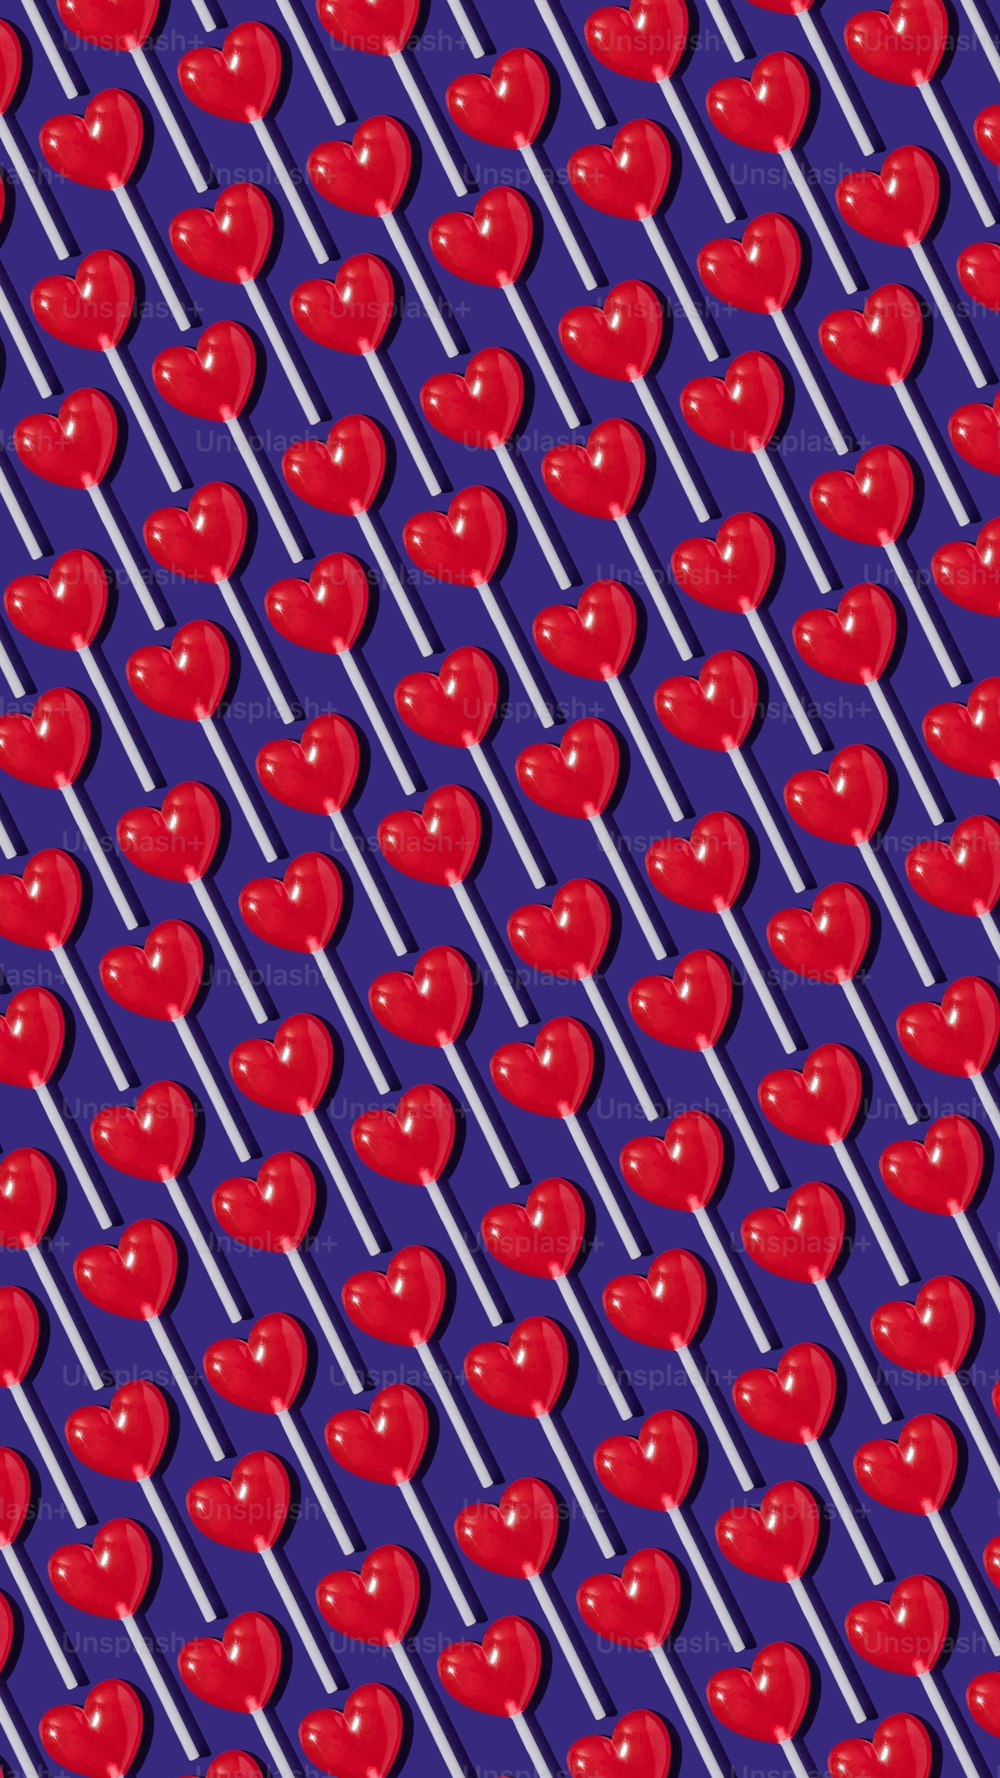 Un patrón de manzanas rojas sobre un fondo púrpura